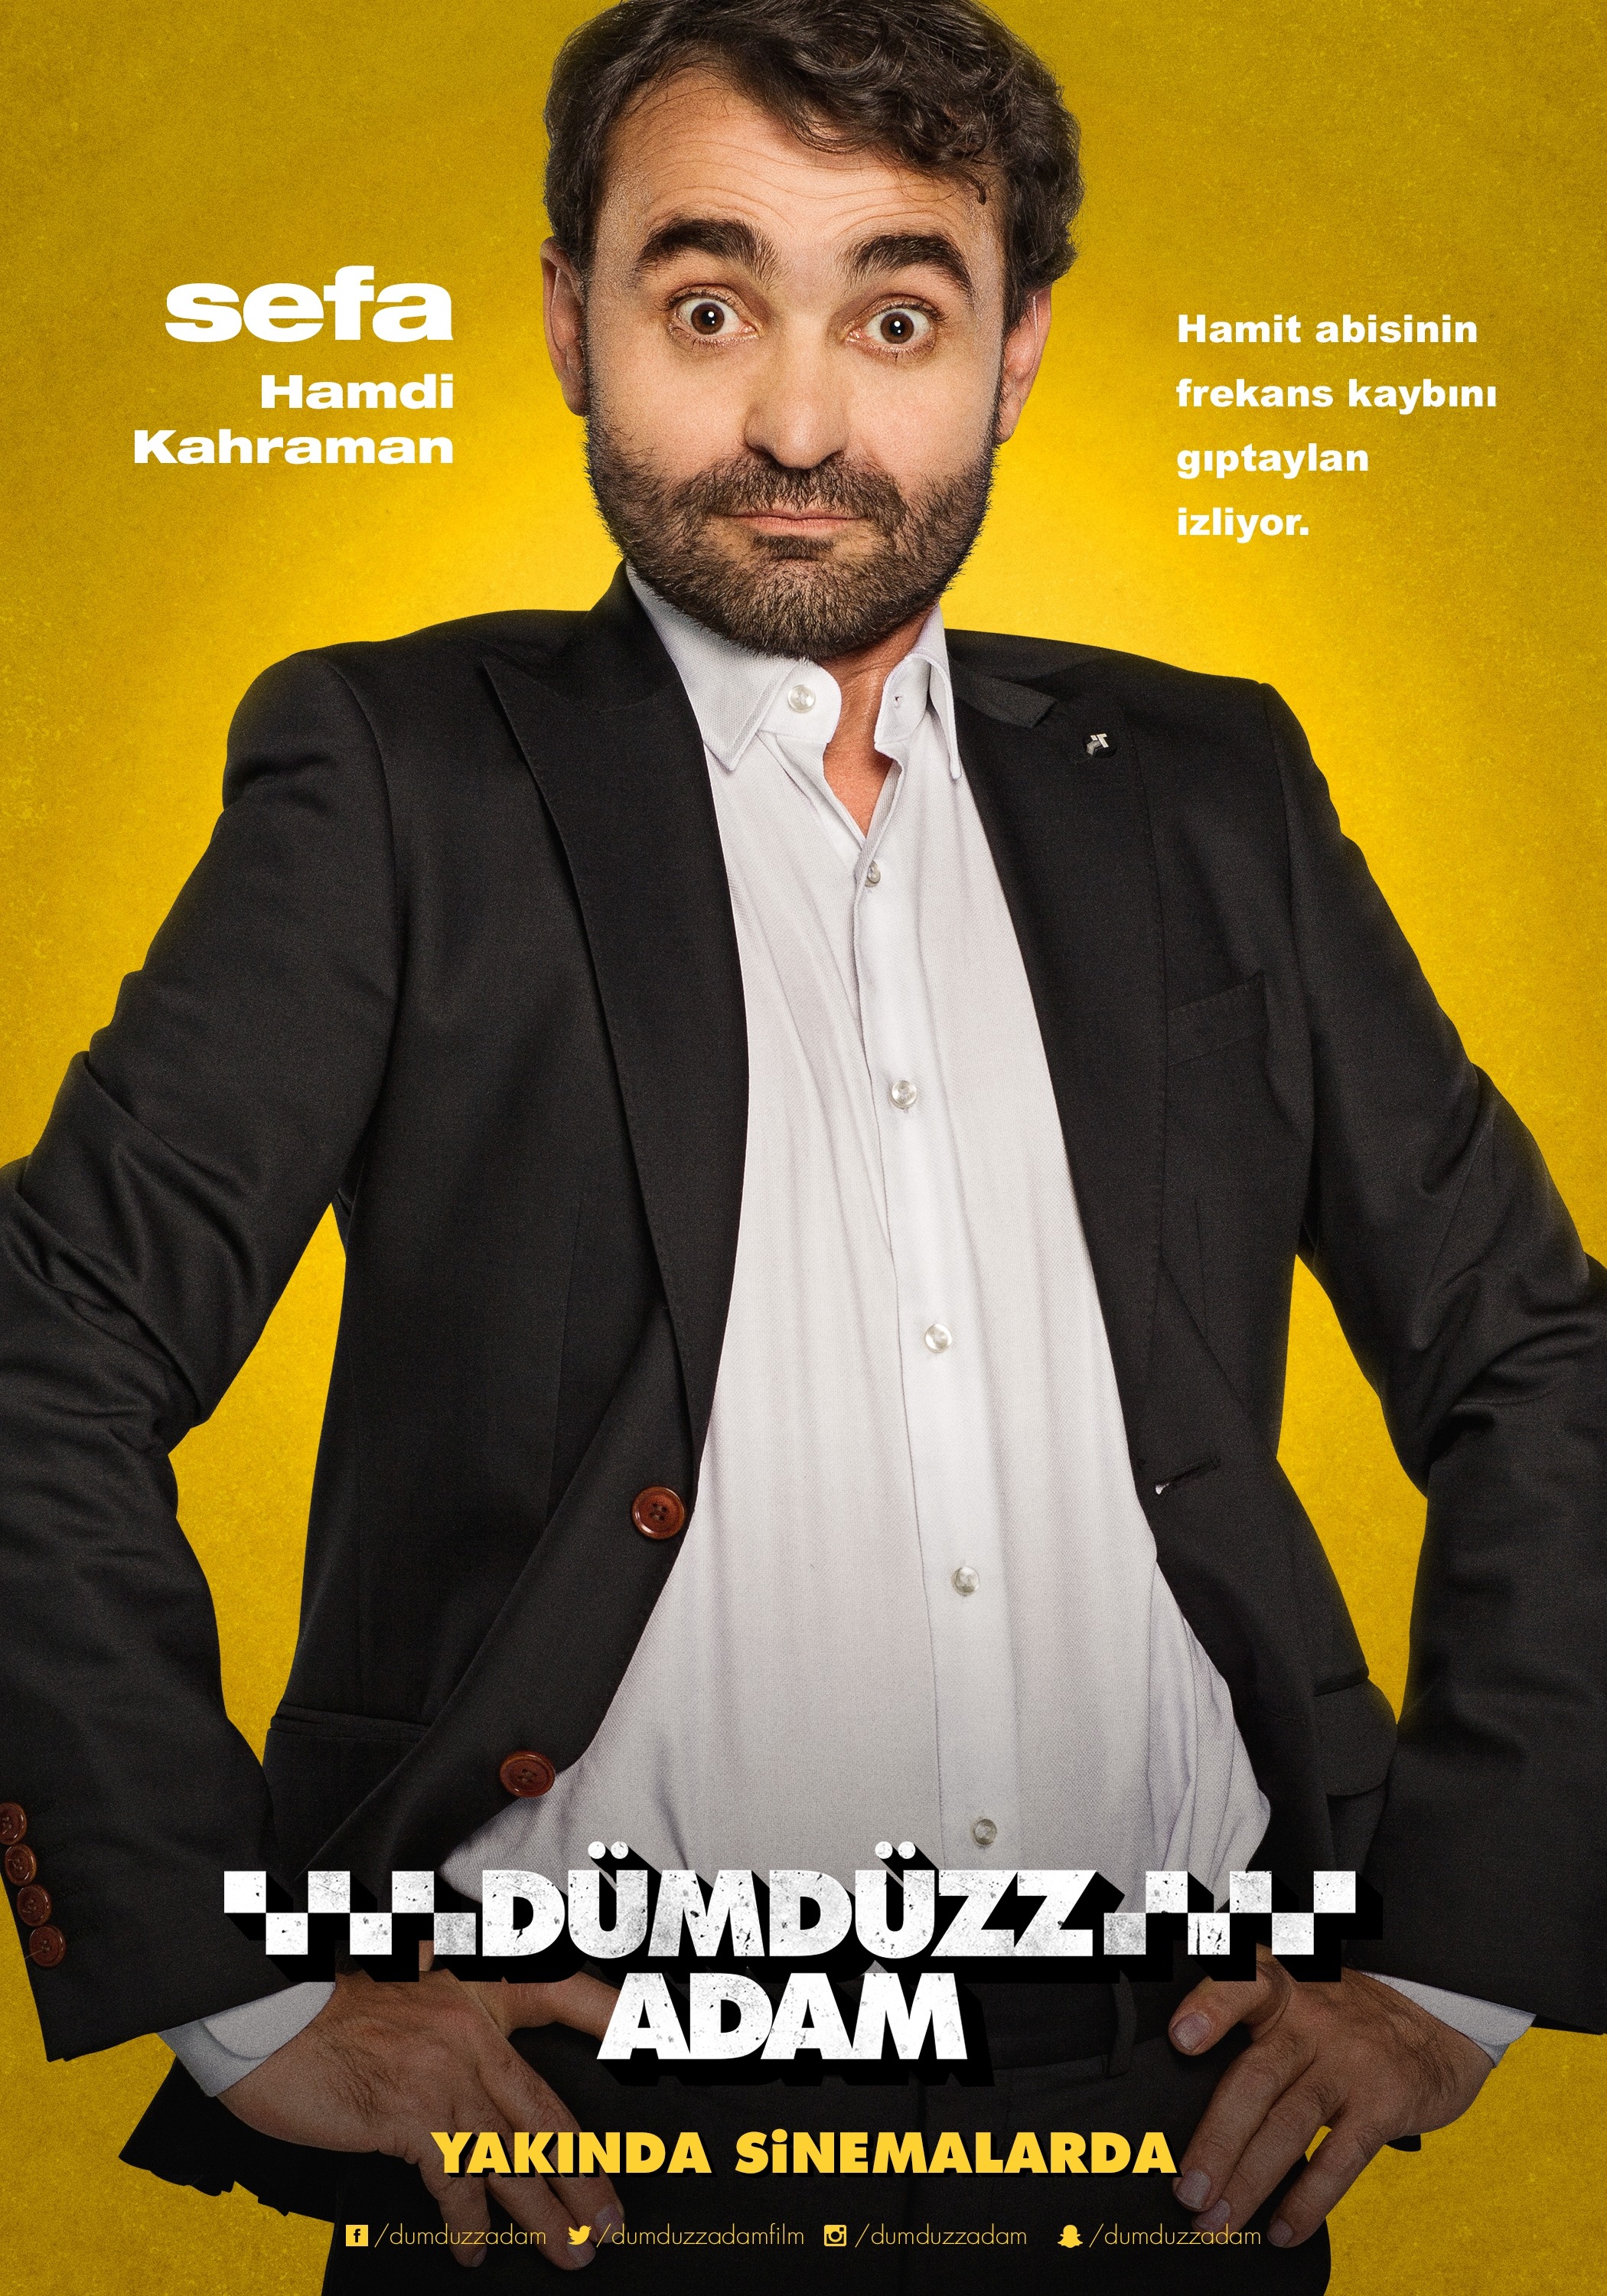 Mega Sized Movie Poster Image for Dümdüzz Adam (#16 of 16)